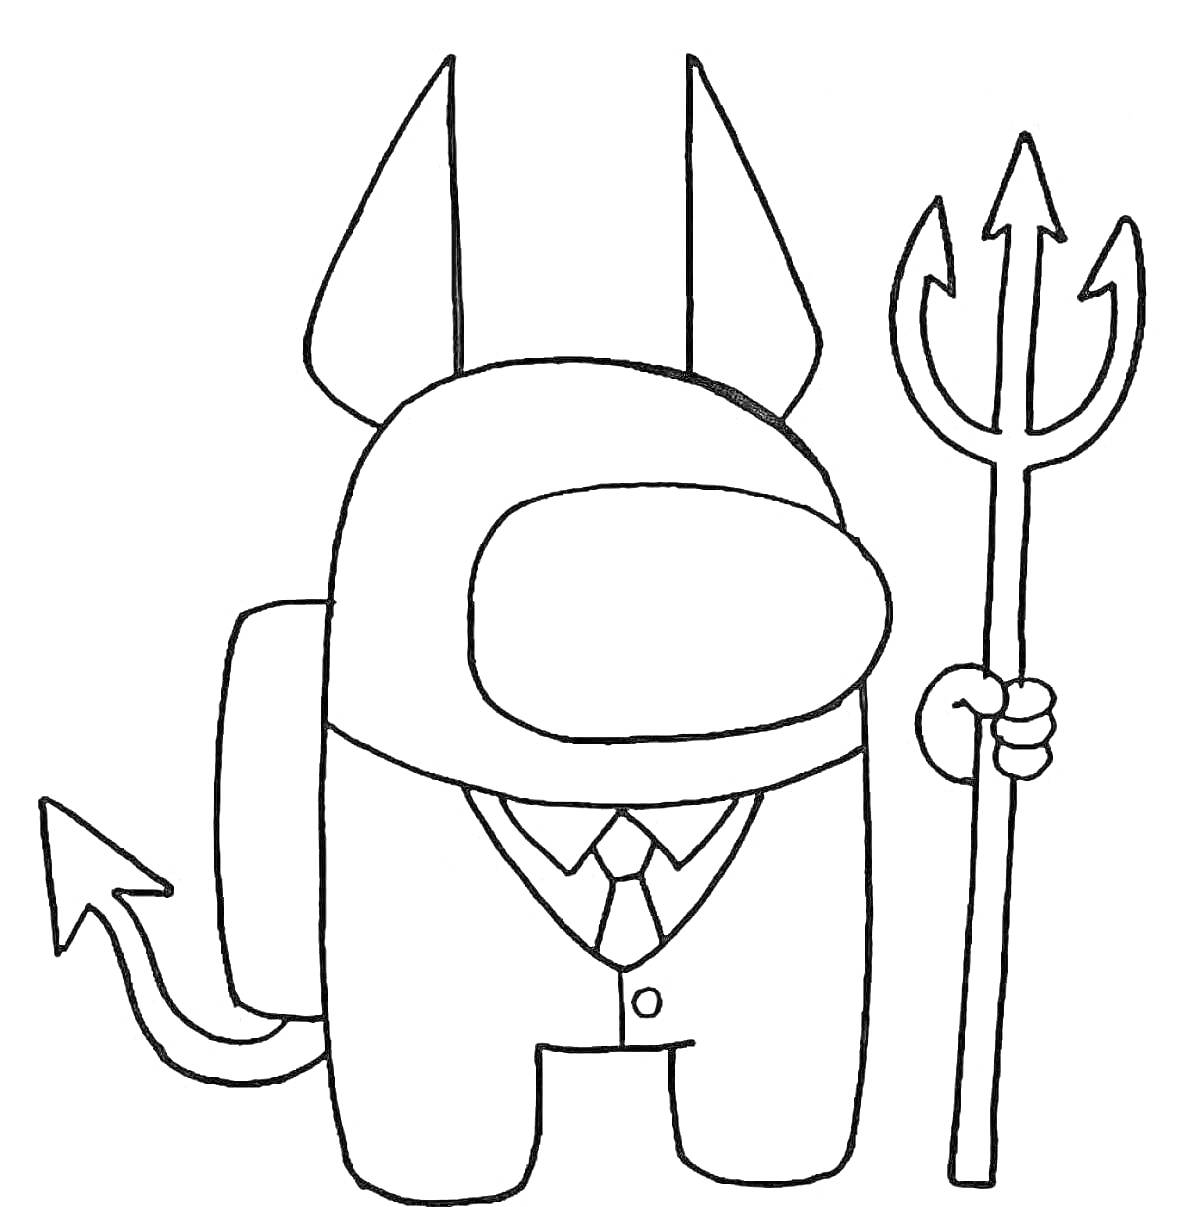 Амонгас персонаж в костюме дьявола с трезубцем